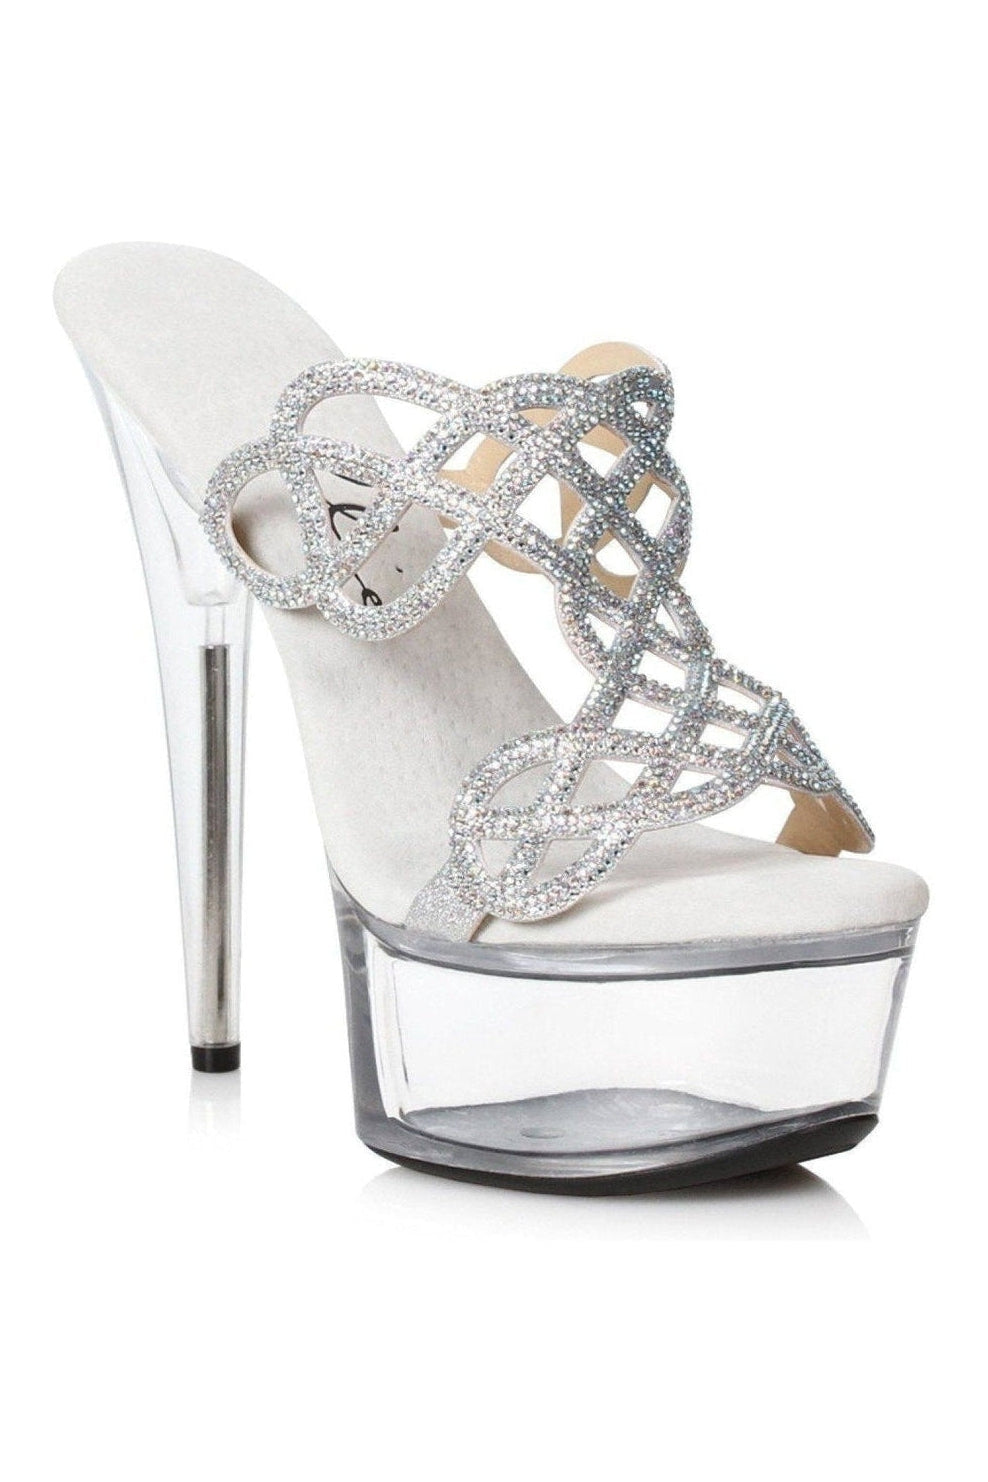 Ellie Shoes Silver Slides Platform Stripper Shoes | Buy at Sexyshoes.com